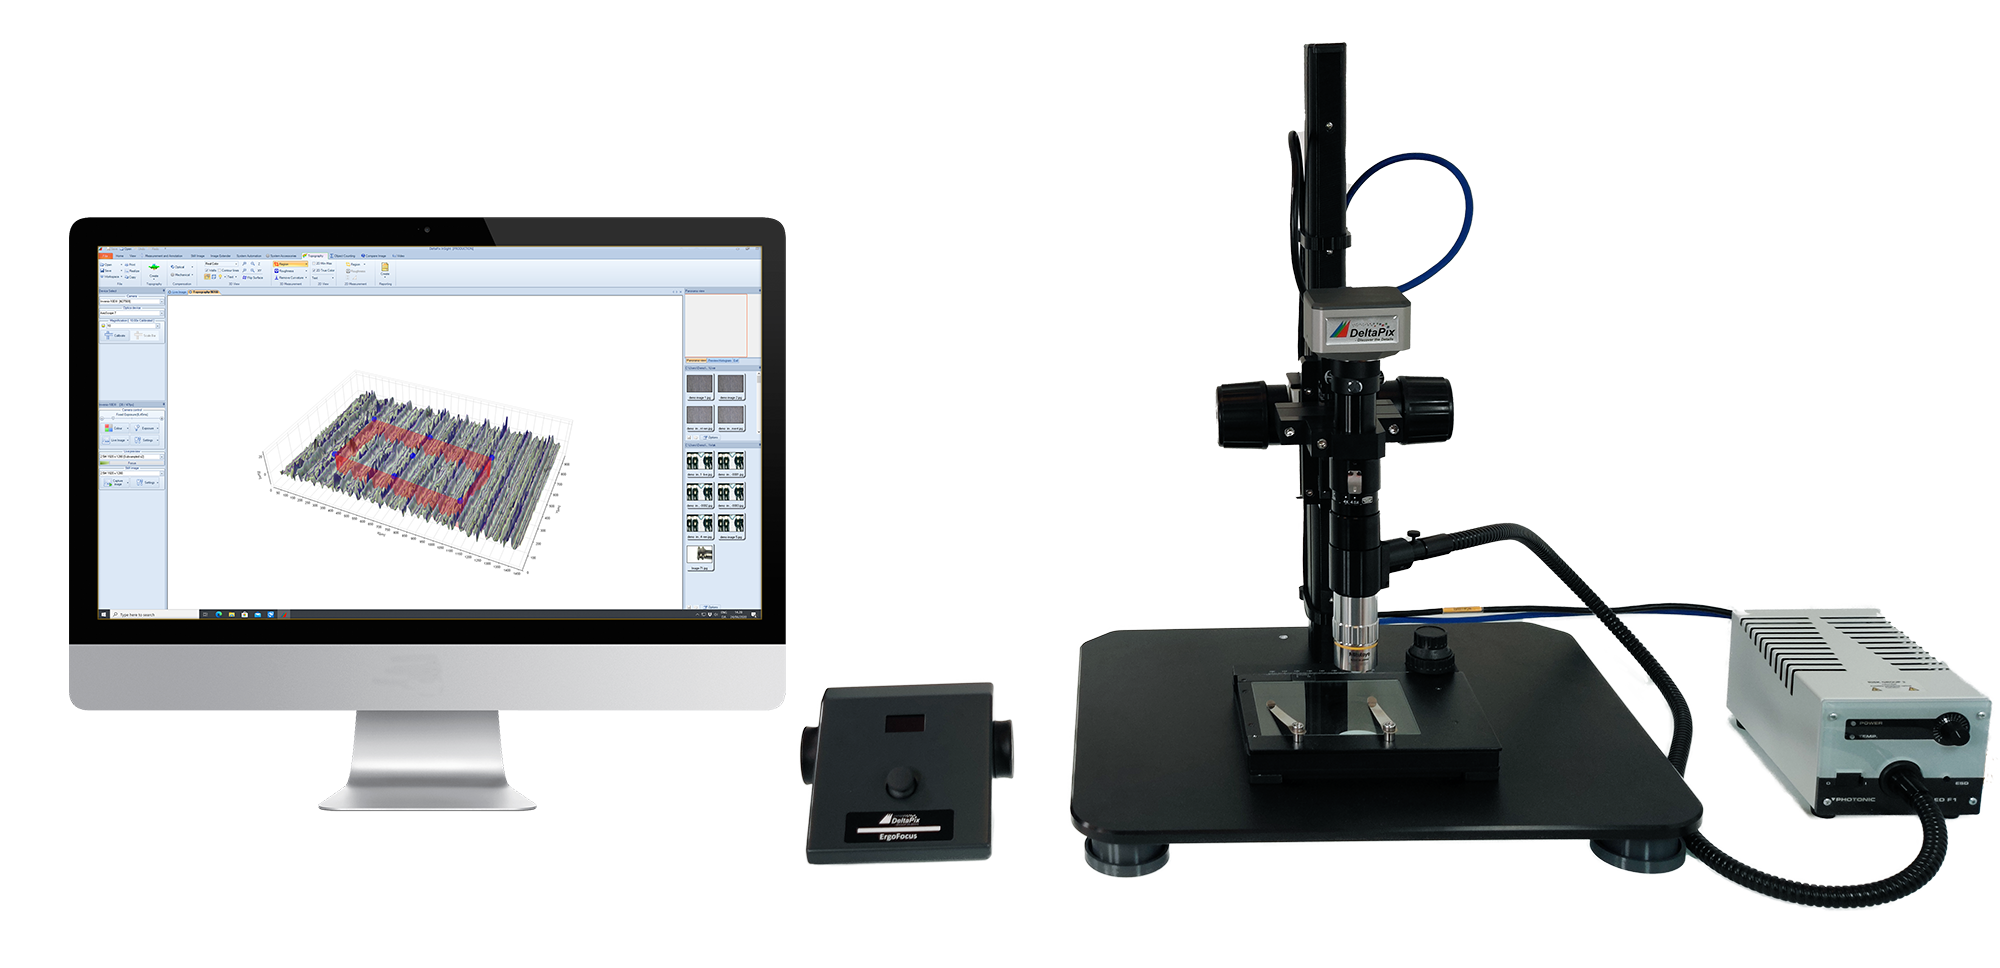 3D digital microscope